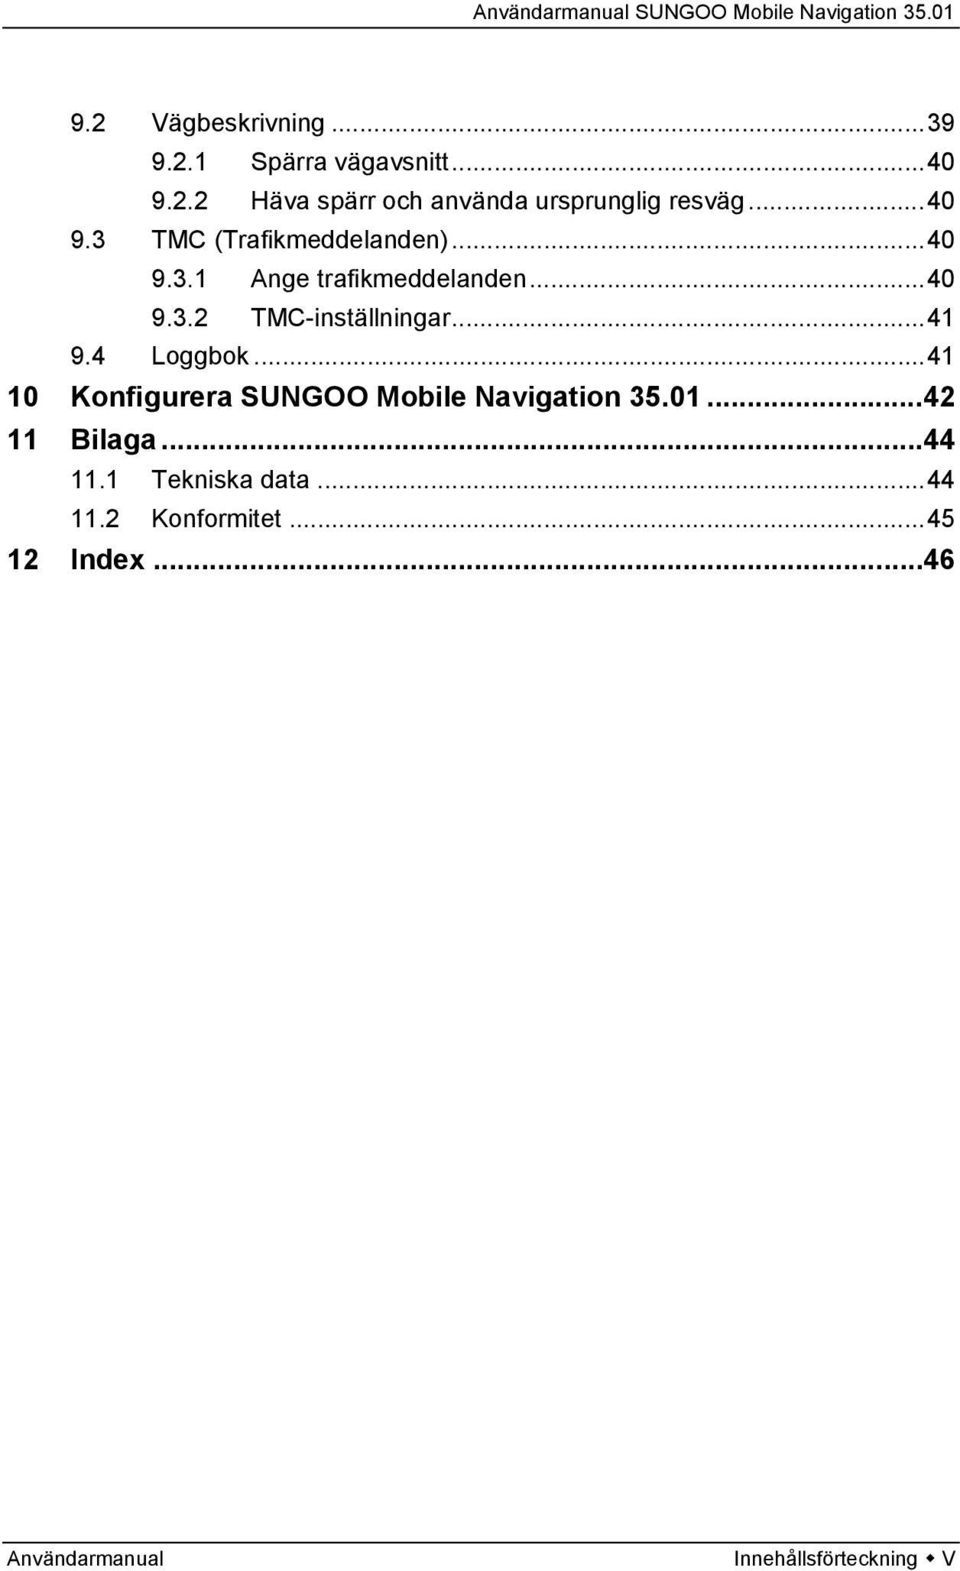 ..41 9.4 Loggbok...41 10 Konfigurera SUNGOO Mobile Navigation 35.01...42 11 Bilaga...44 11.